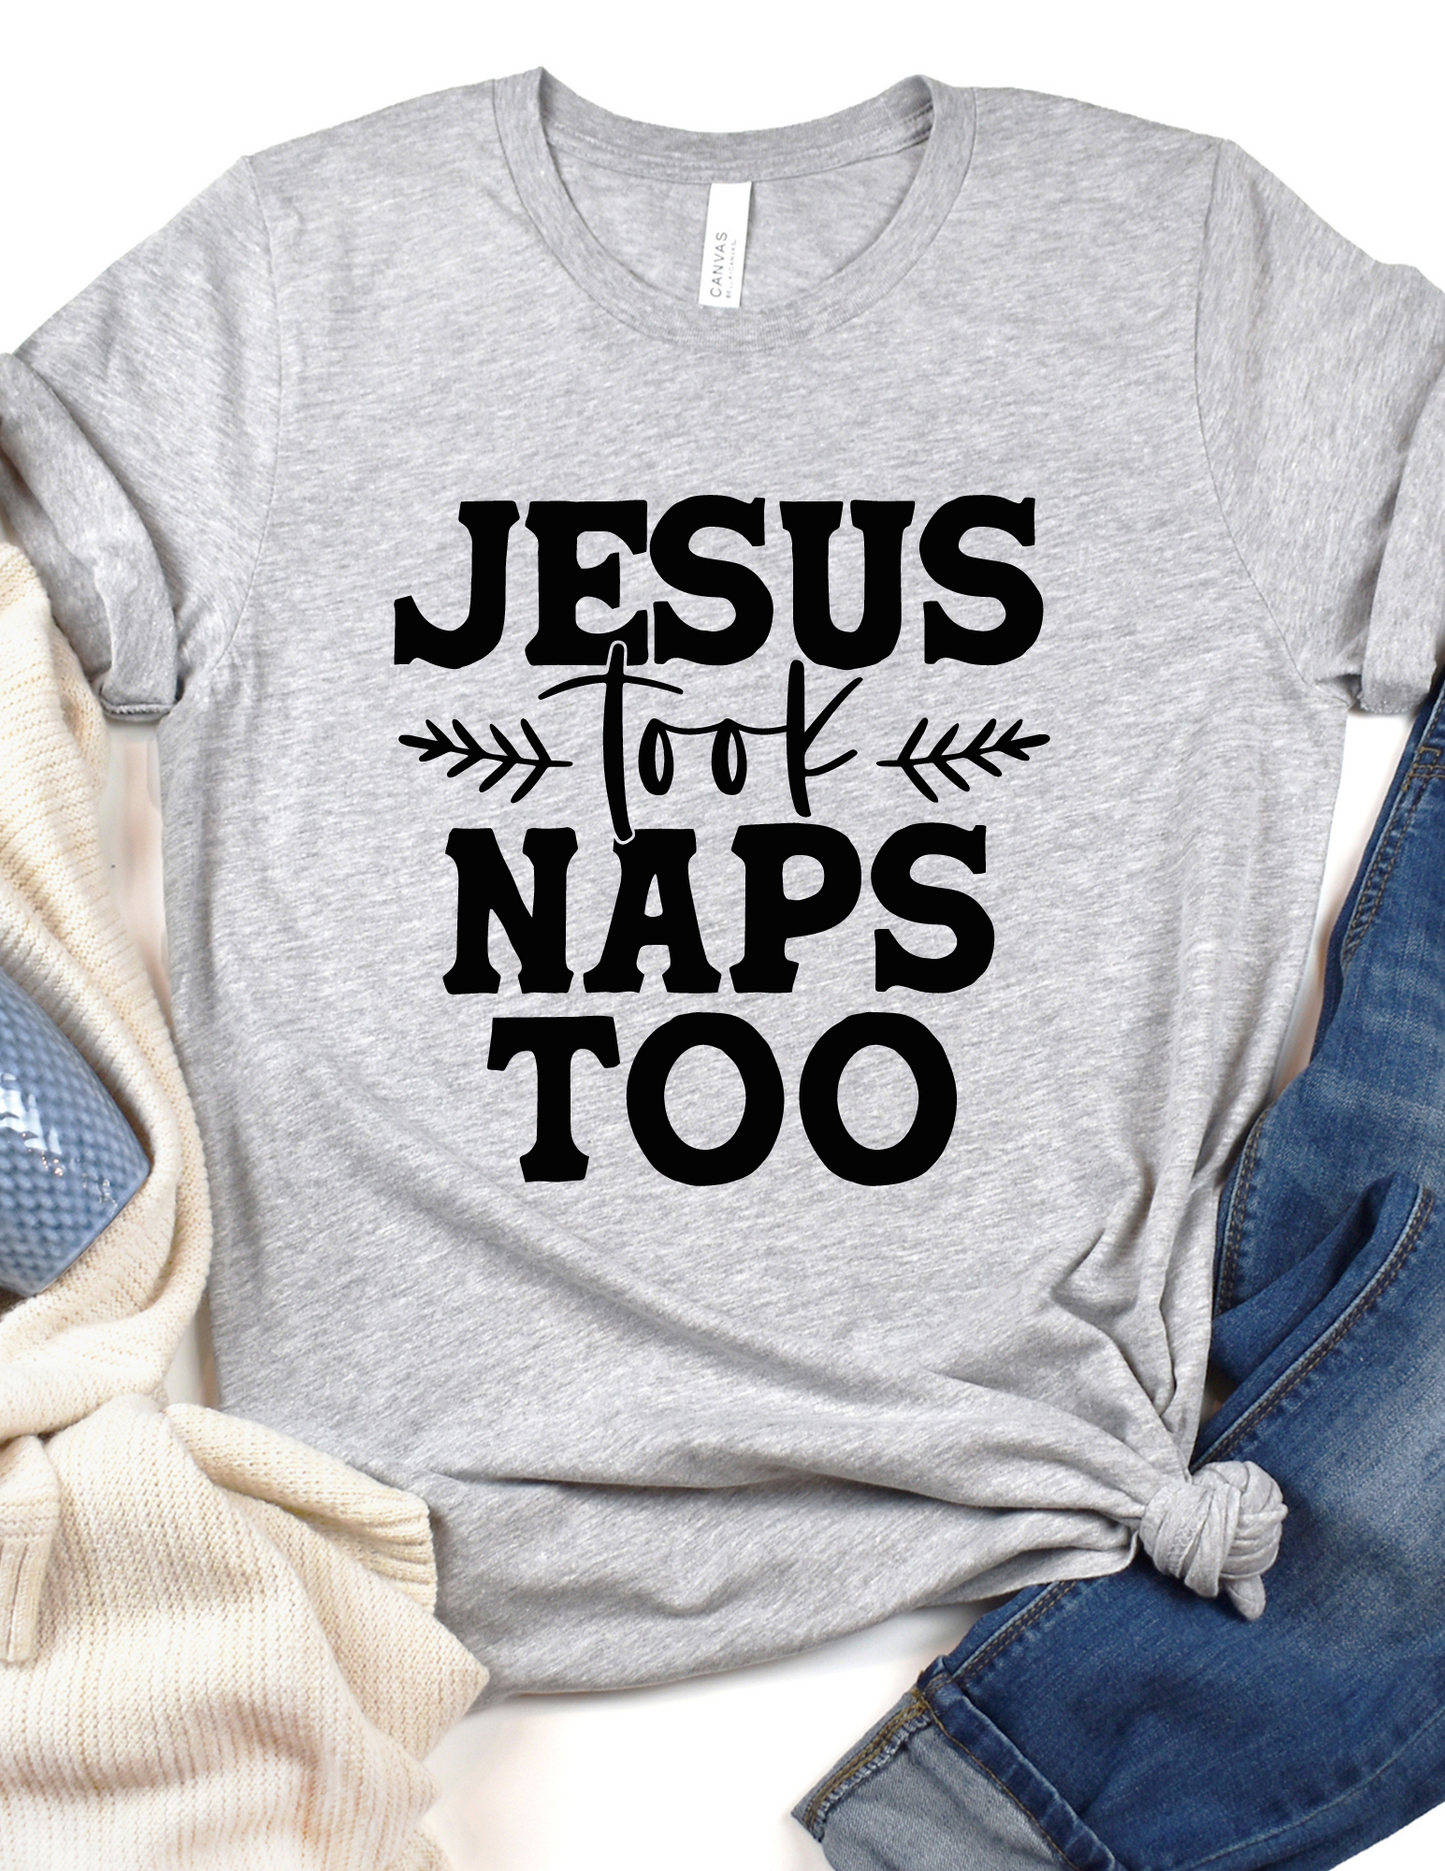 "Jesus Took Naps Too"